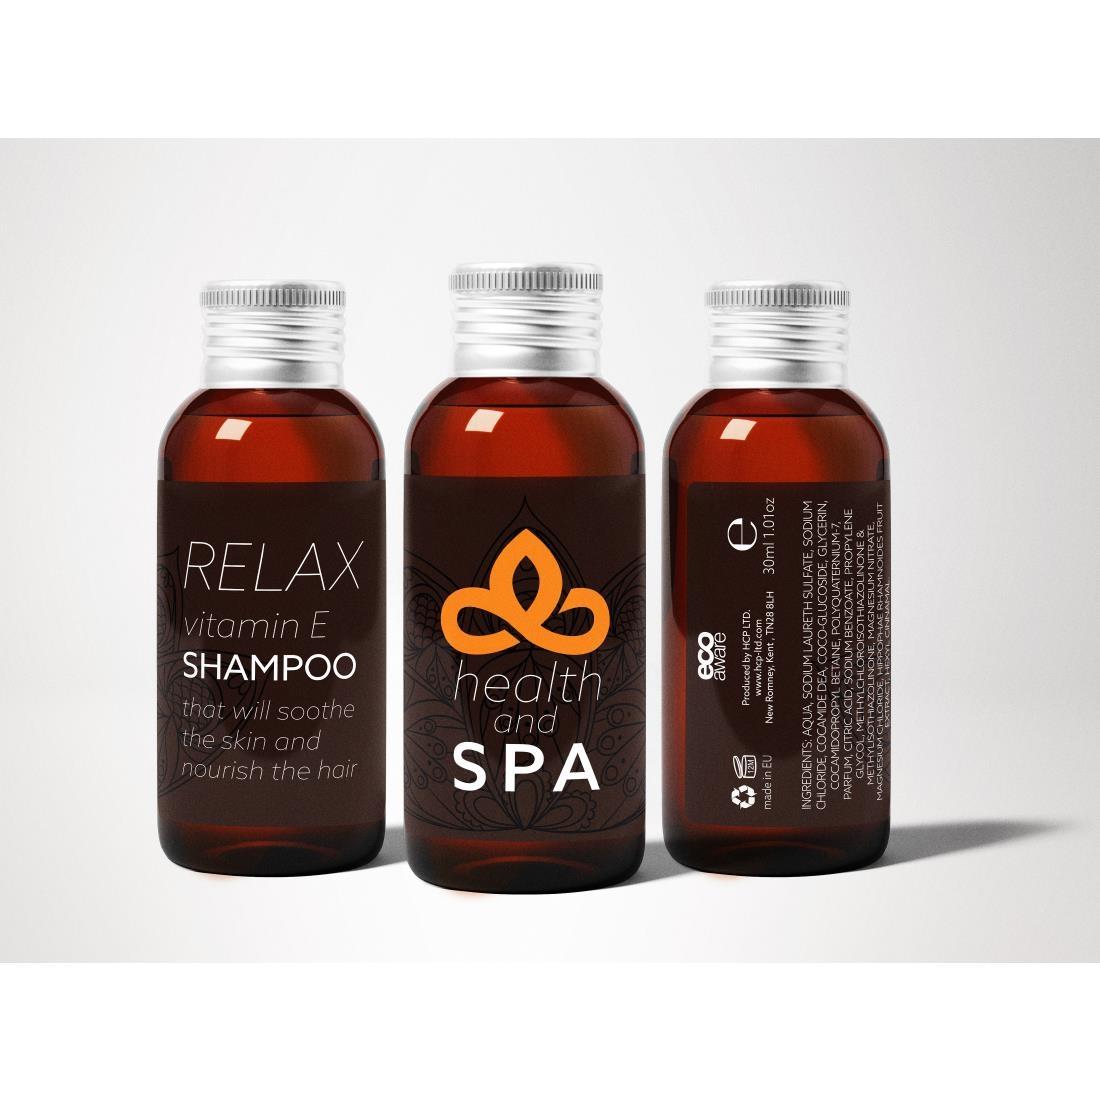 Health & Spa Green Tea Scented Shampoo 30ml (Pack of 50) - HC685  - 4